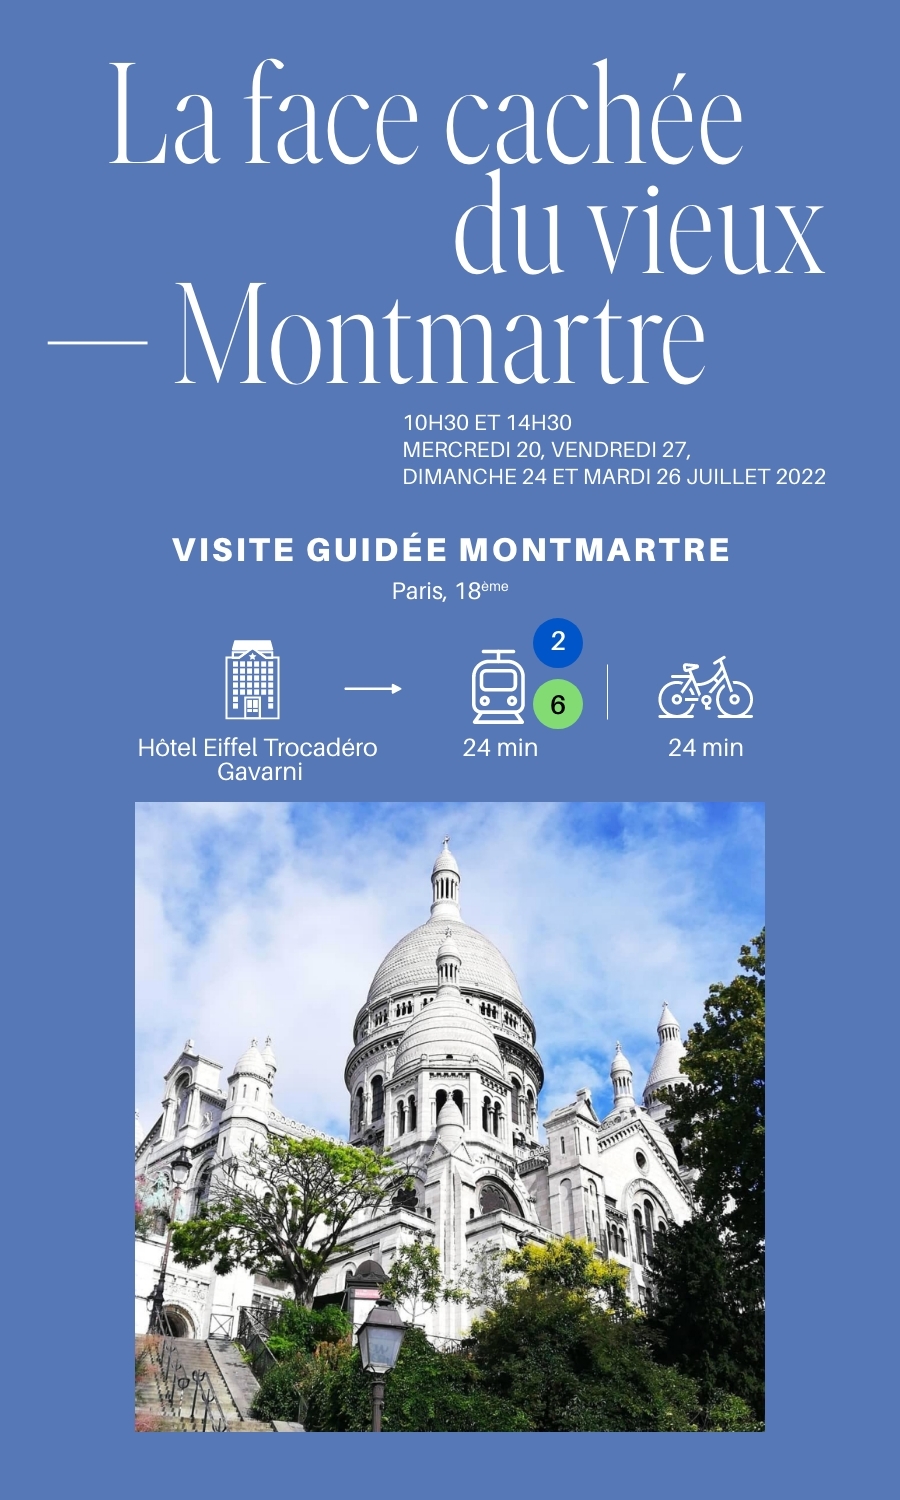 The secret side of the old Montmartre